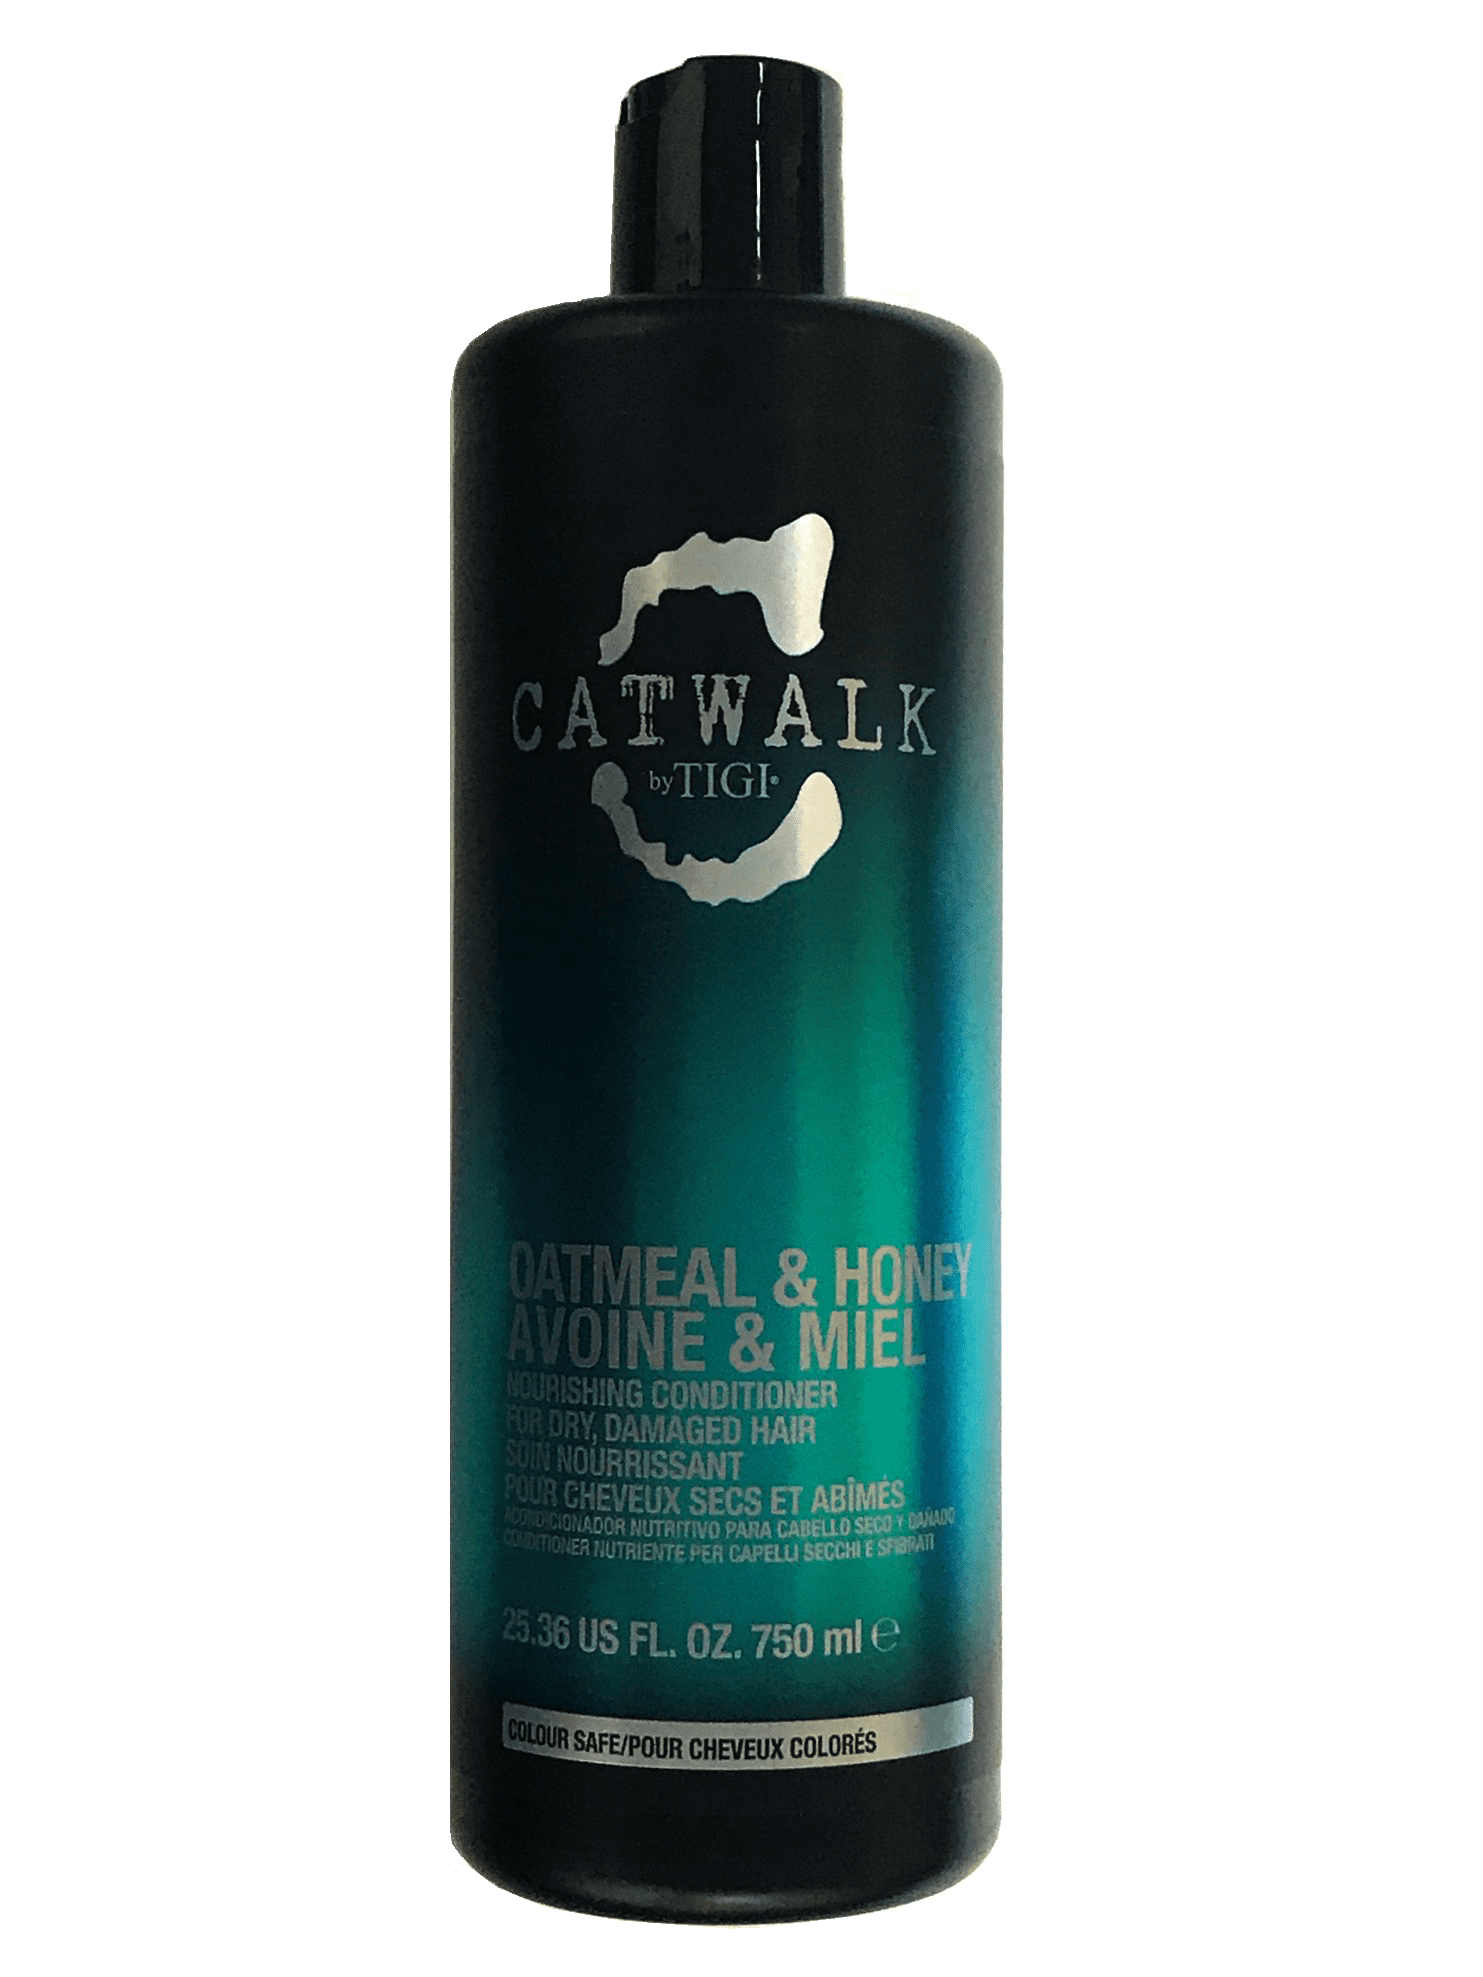 Tigi Catwalk Oatmeal & Honey Avoine & Miel Conditioner 25.36 Oz, For Dry Damaged Hair - Walmart.com